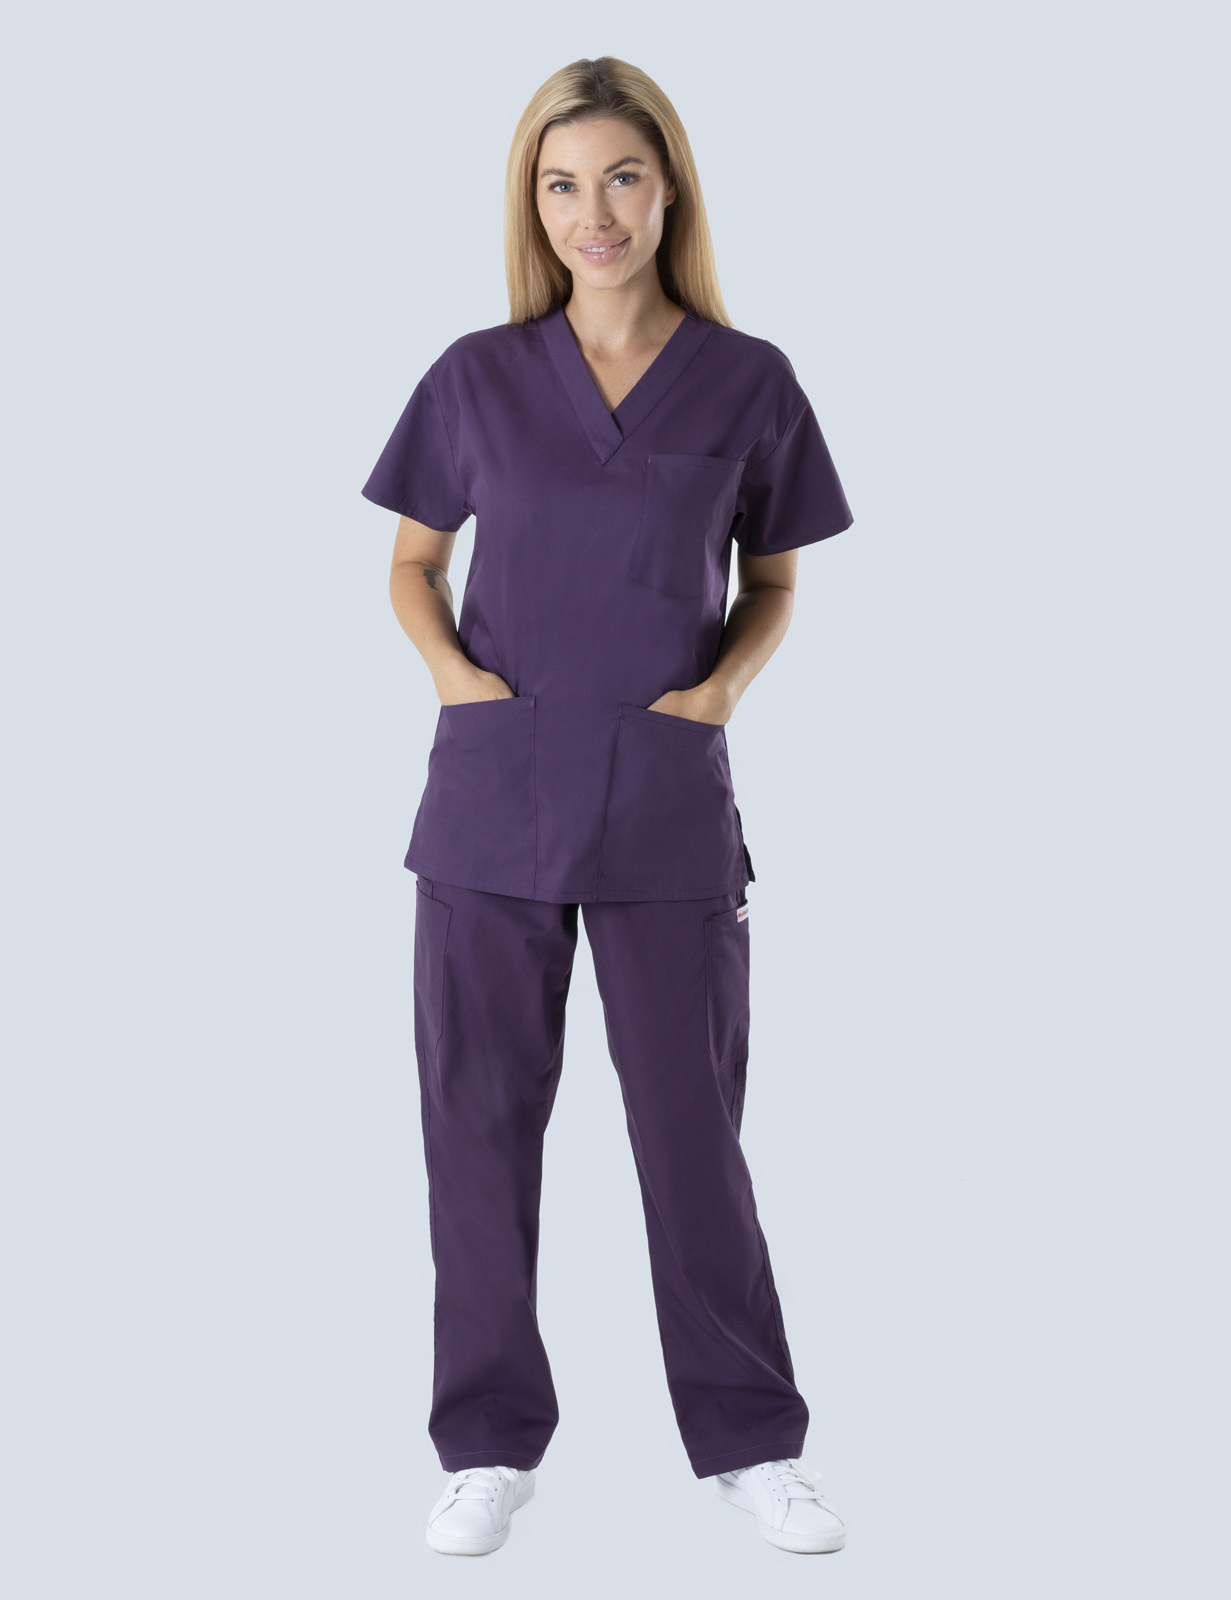 Kilcoy Hospital - Registered Nurse (4 Pocket Scrub Top and Cargo Pants in Aubergine incl Logos)